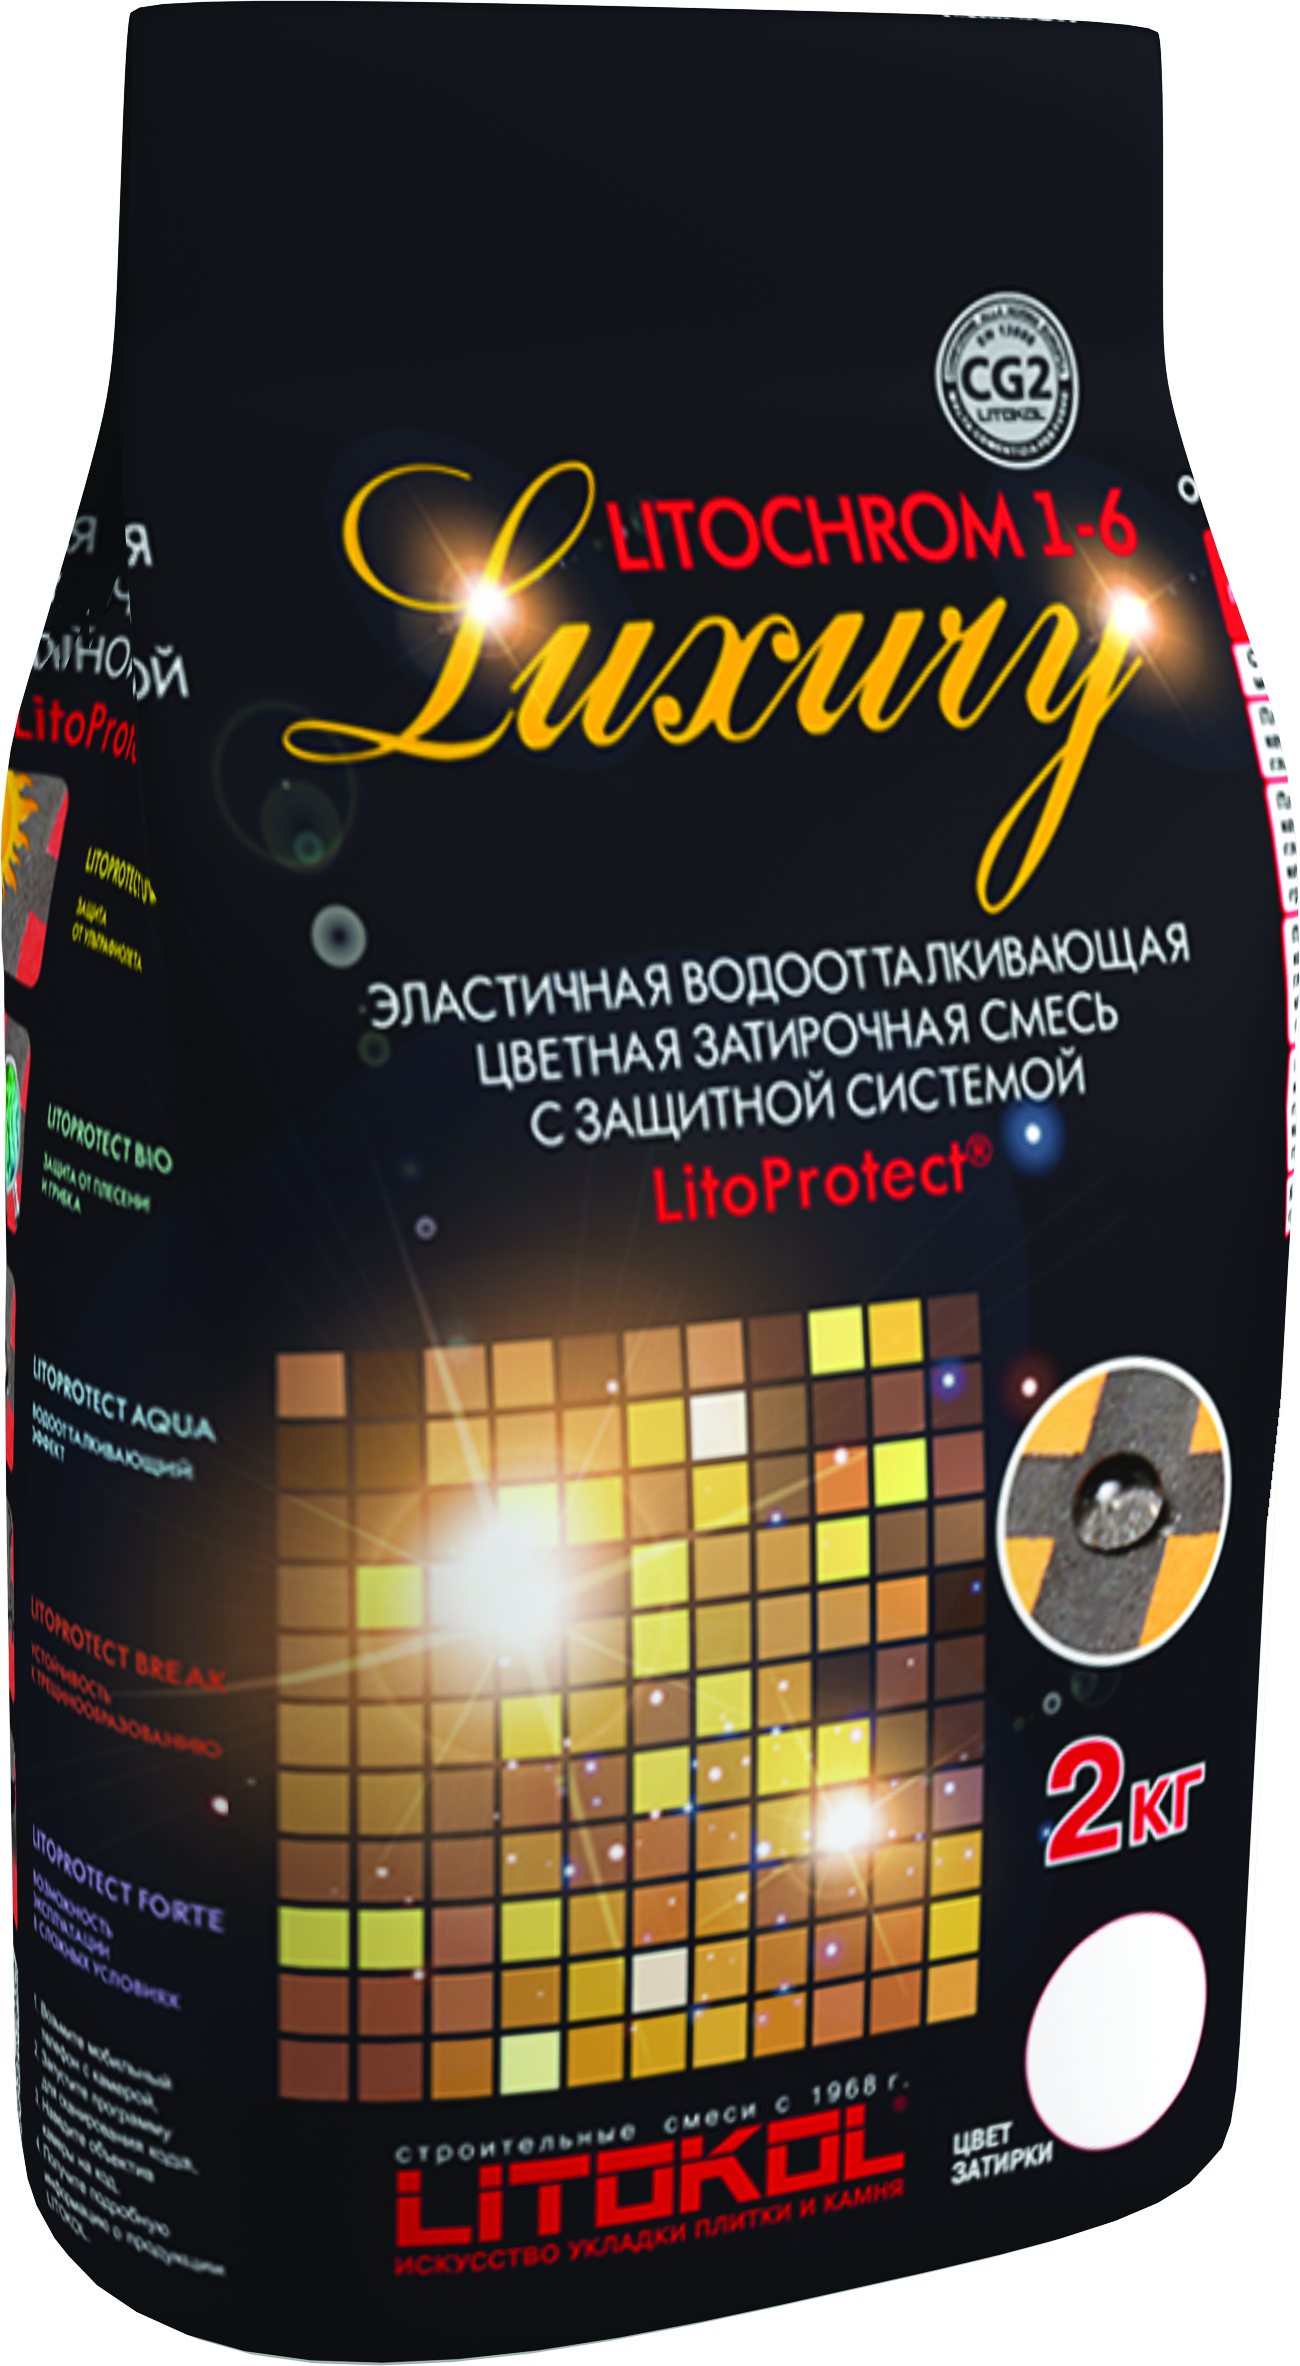 Купить Litokol Litochrom 1-6 Luxury C.20, 2 кг